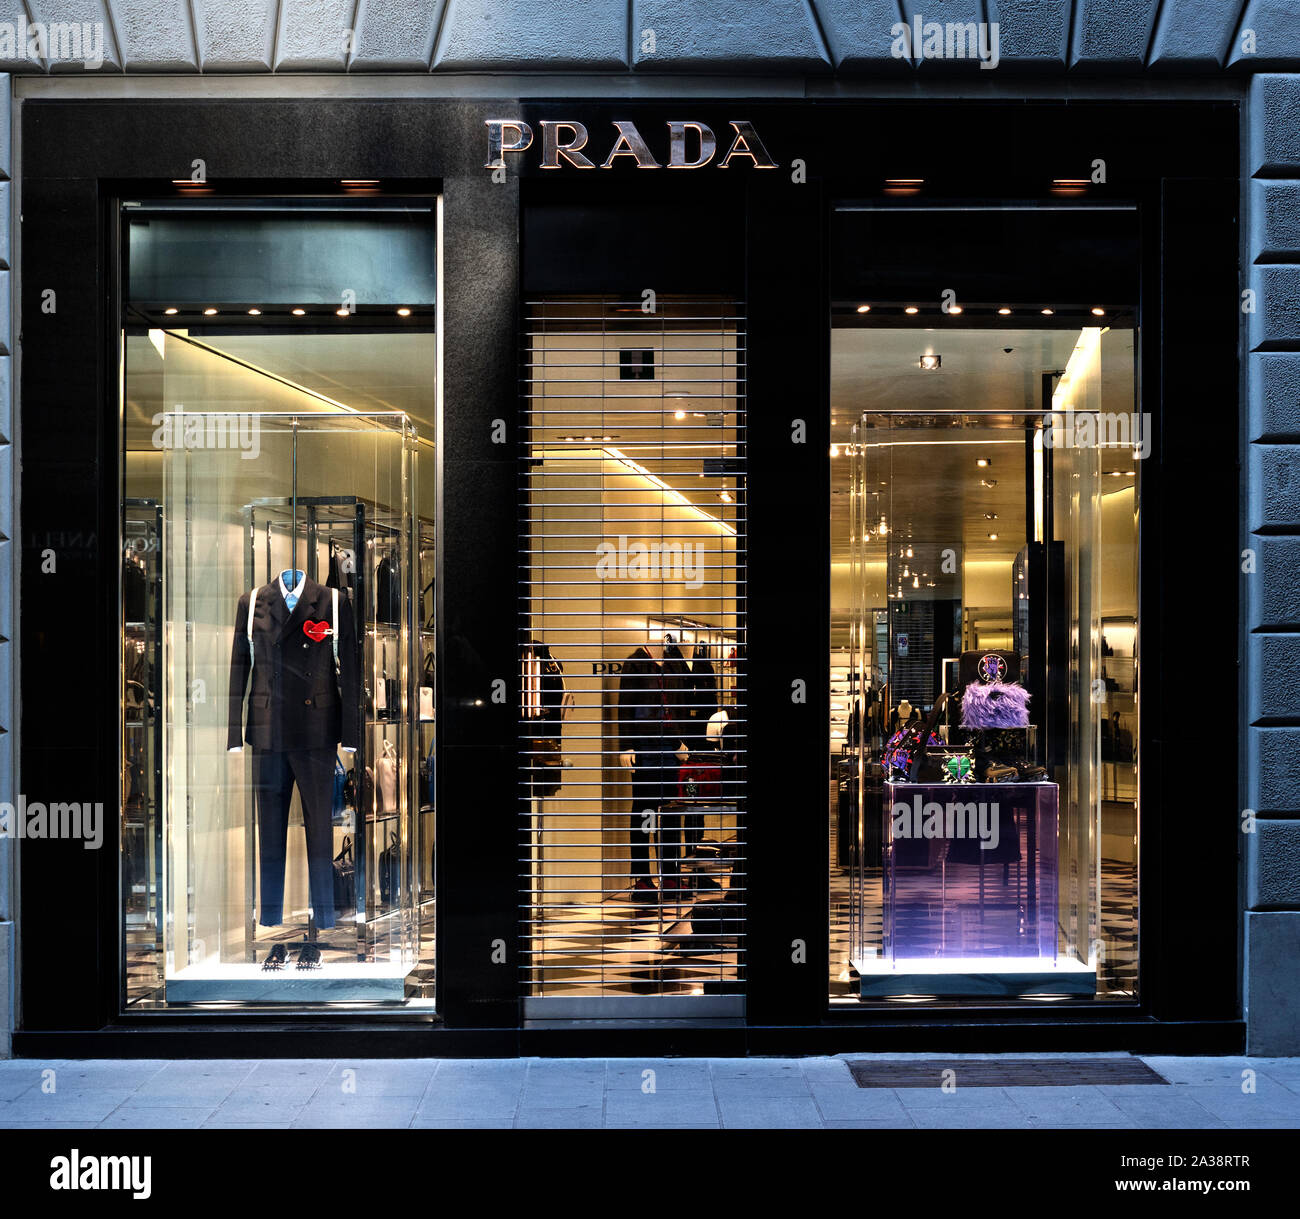 prada, italian luxury fashion house, store, shop, business, company, italy  Stock Photo - Alamy